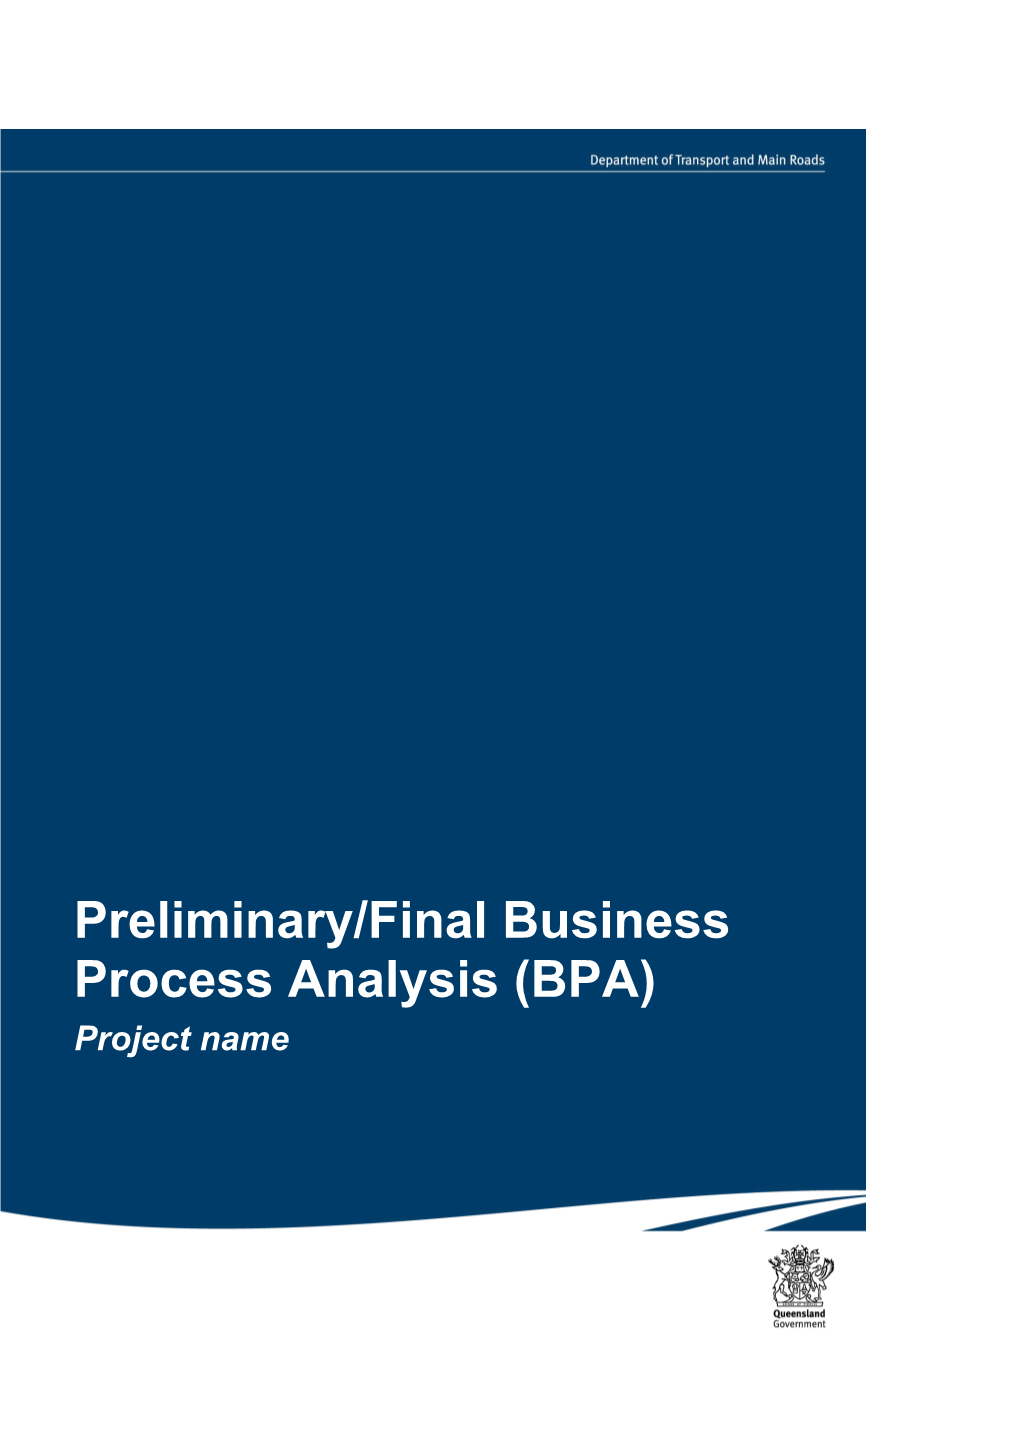 Preliminary/Final Business Process Analysis (BPA)